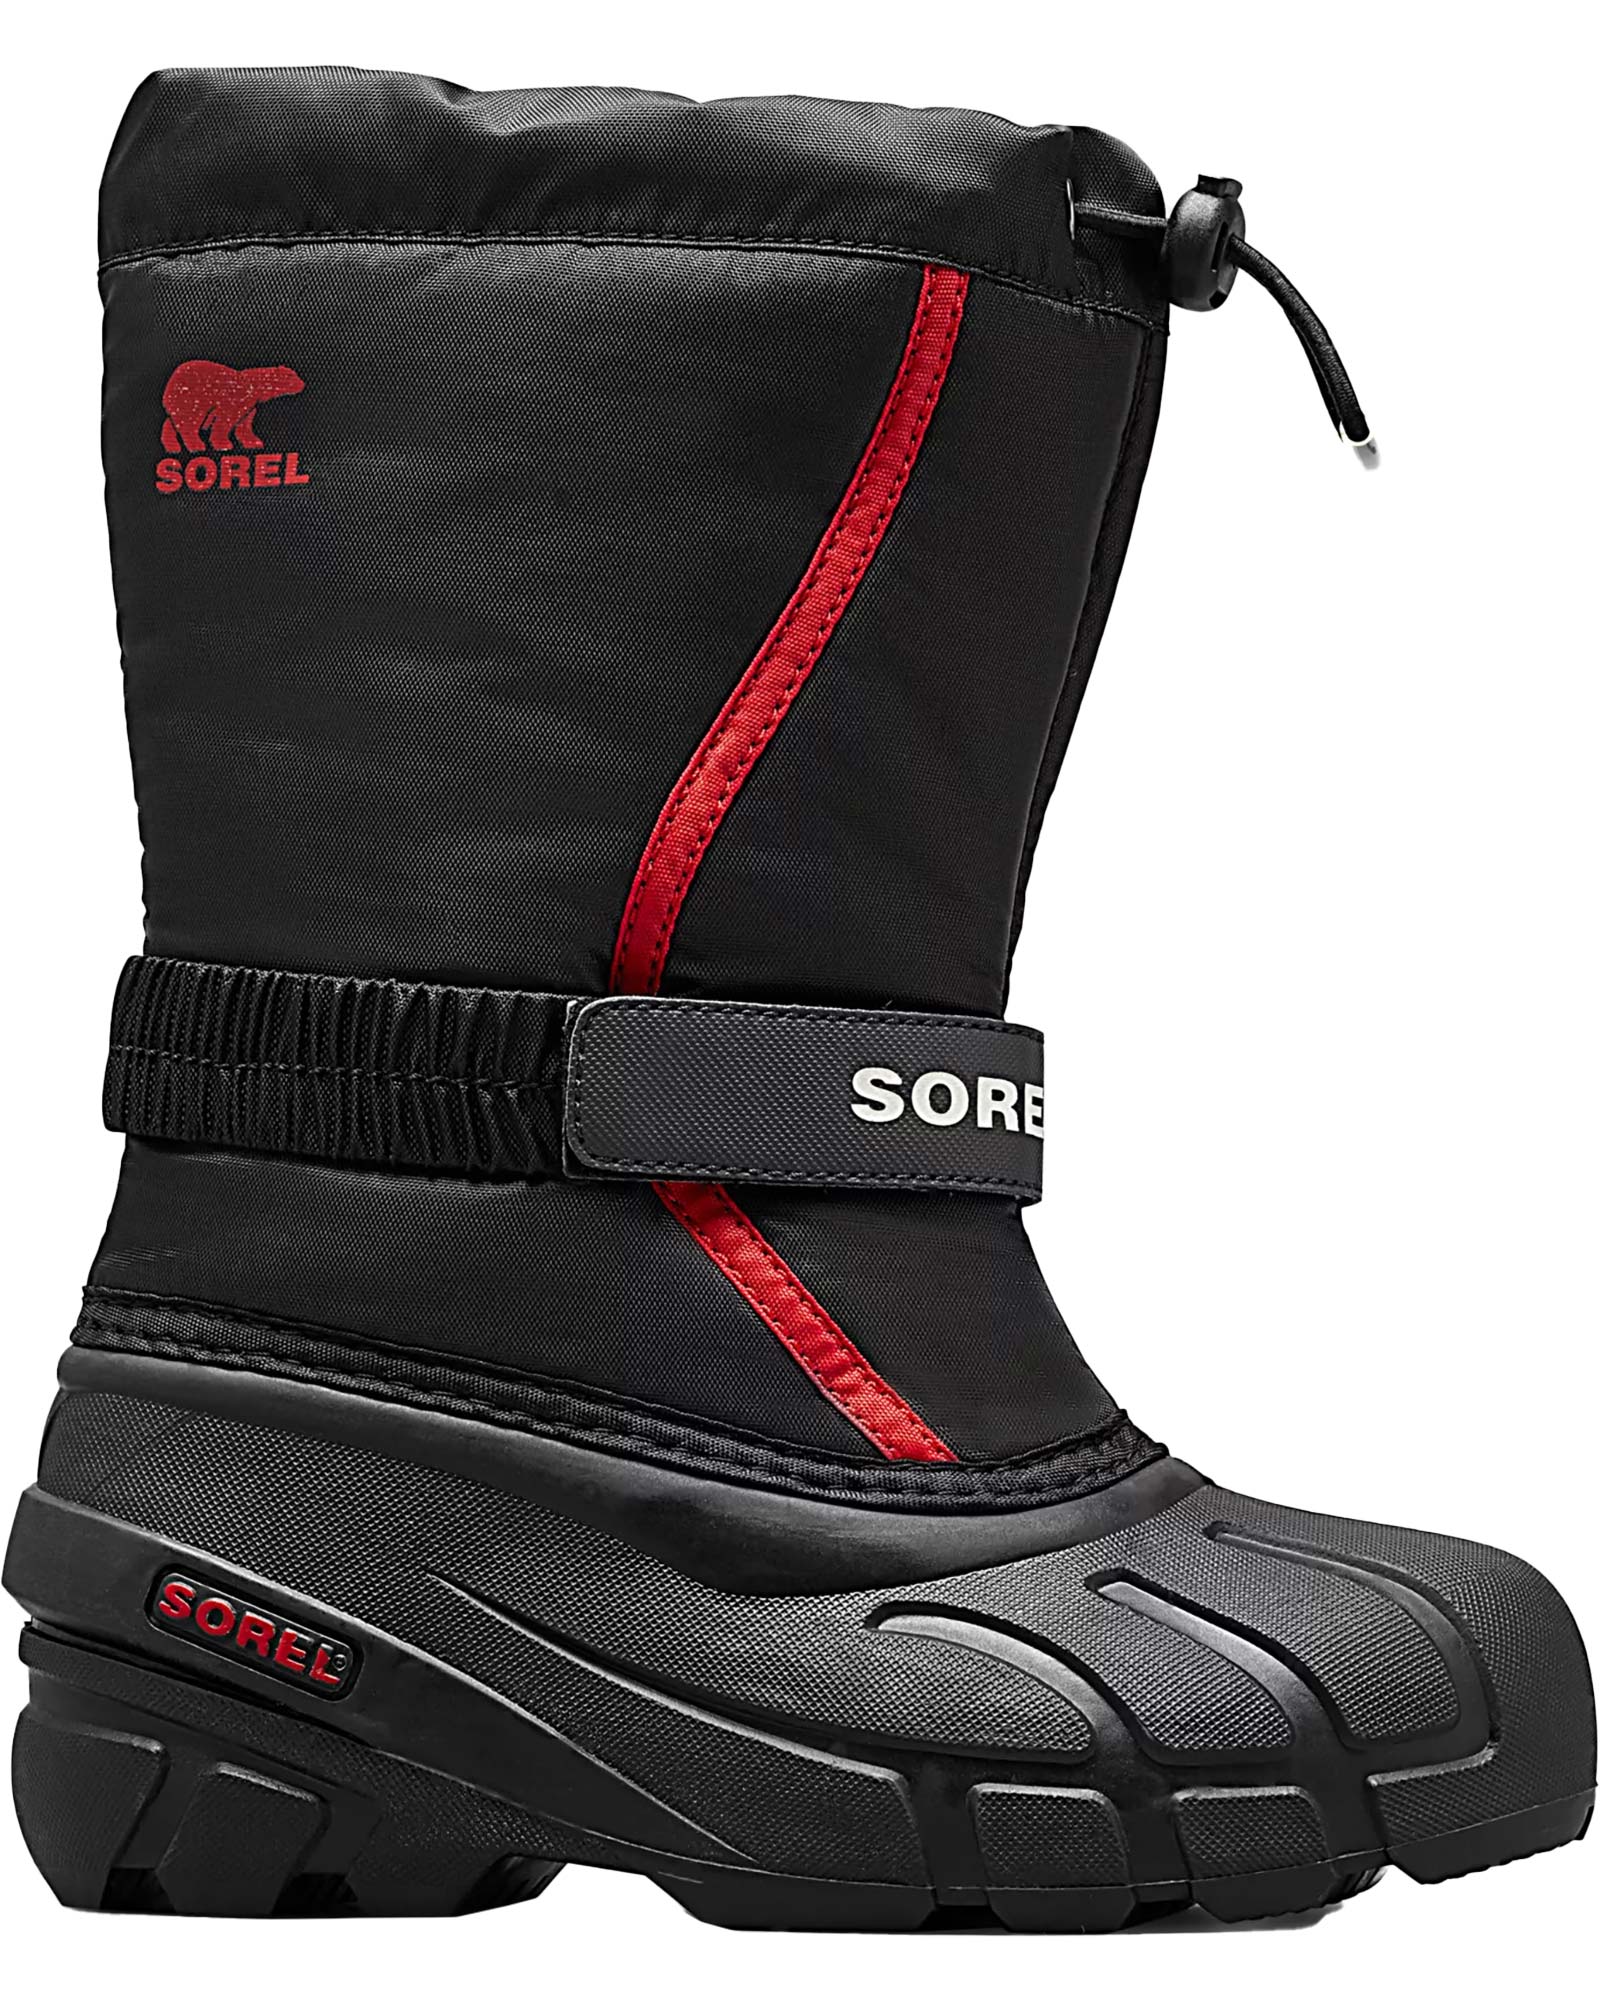 Sorel Flurry Kids’ Snow Boots - Black/Bright Red UK 4